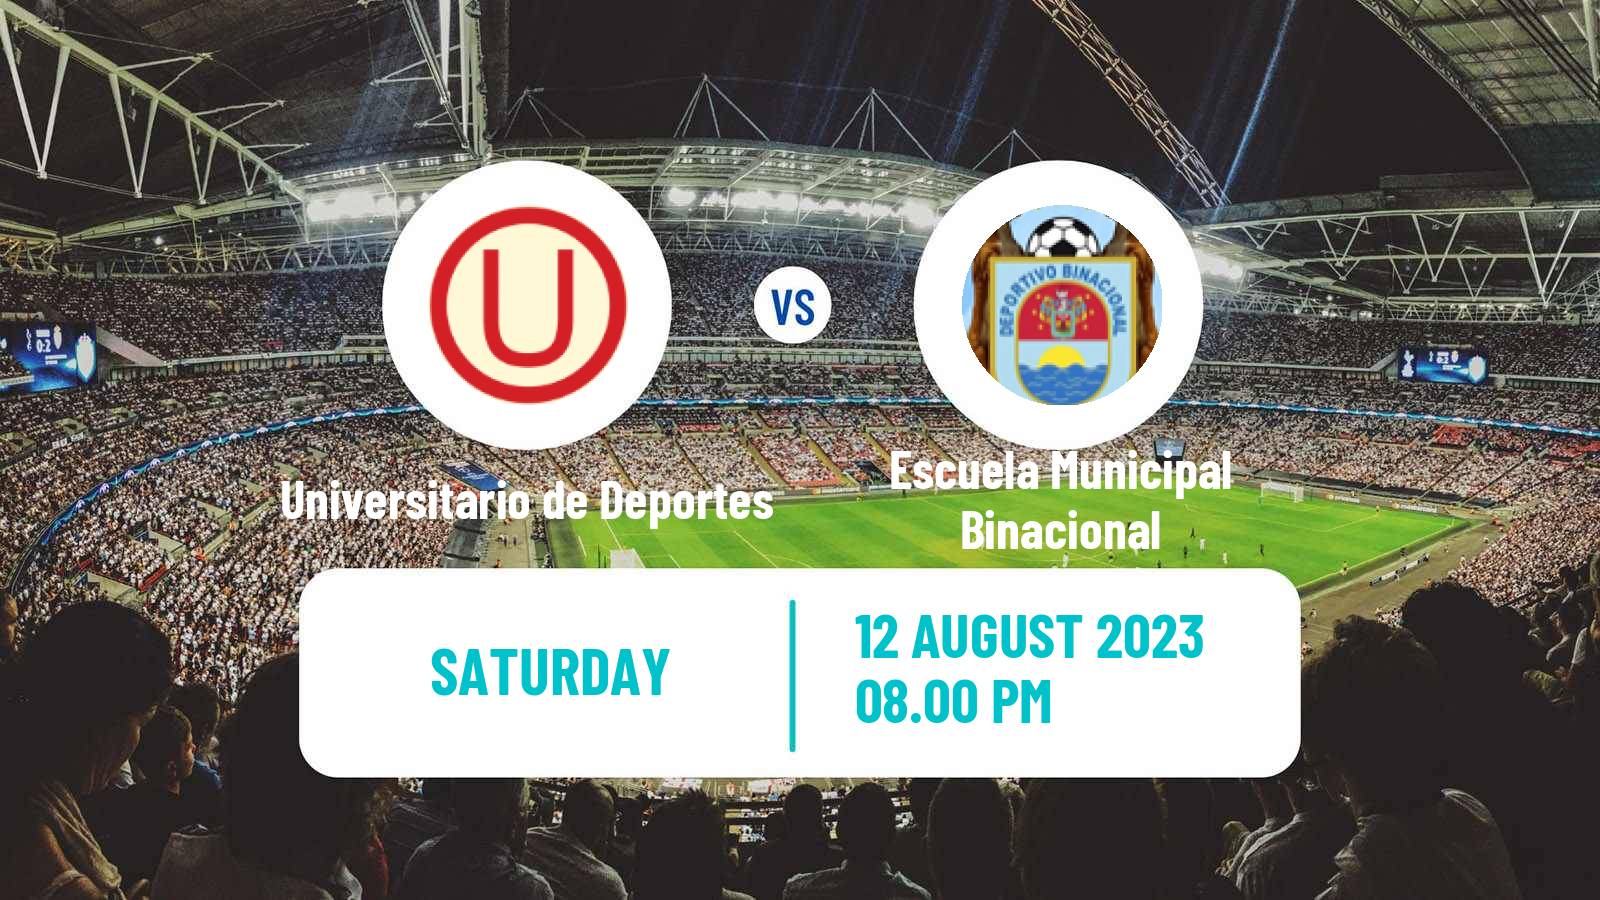 Soccer Peruvian Liga 1 Universitario de Deportes - Escuela Municipal Binacional